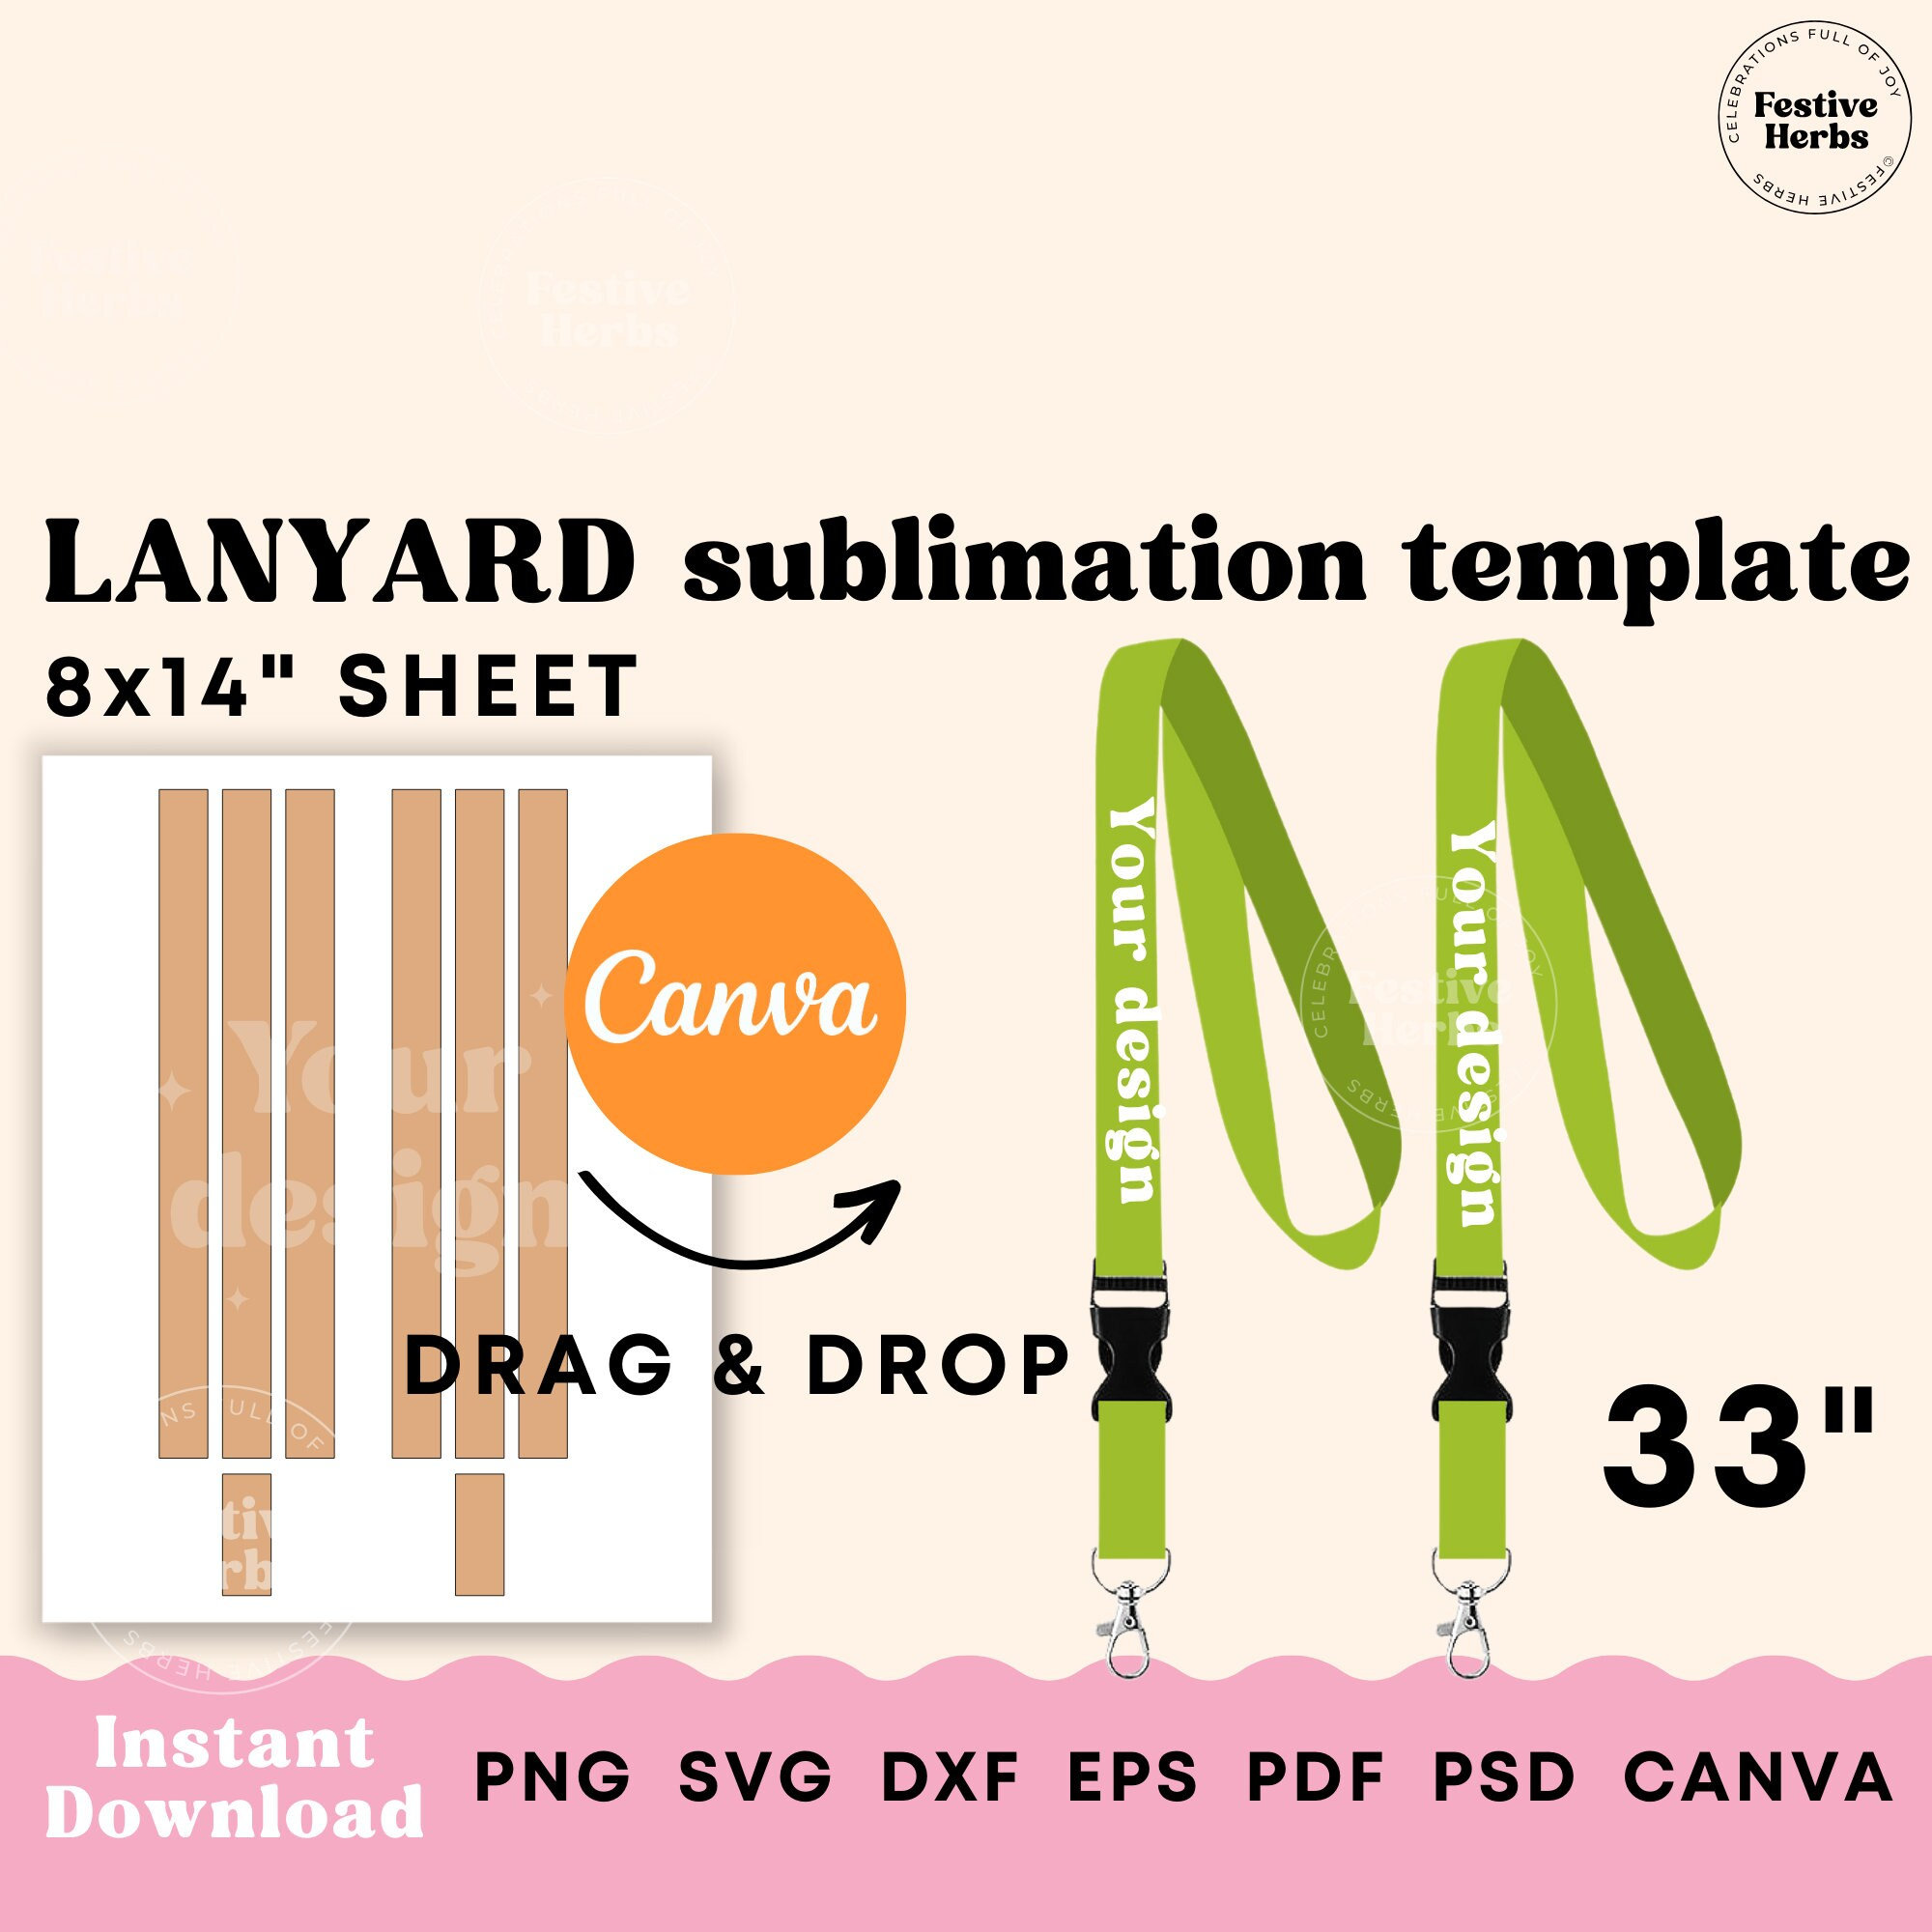 Buy 1 Inch Lanyard Sublimation Kit Online